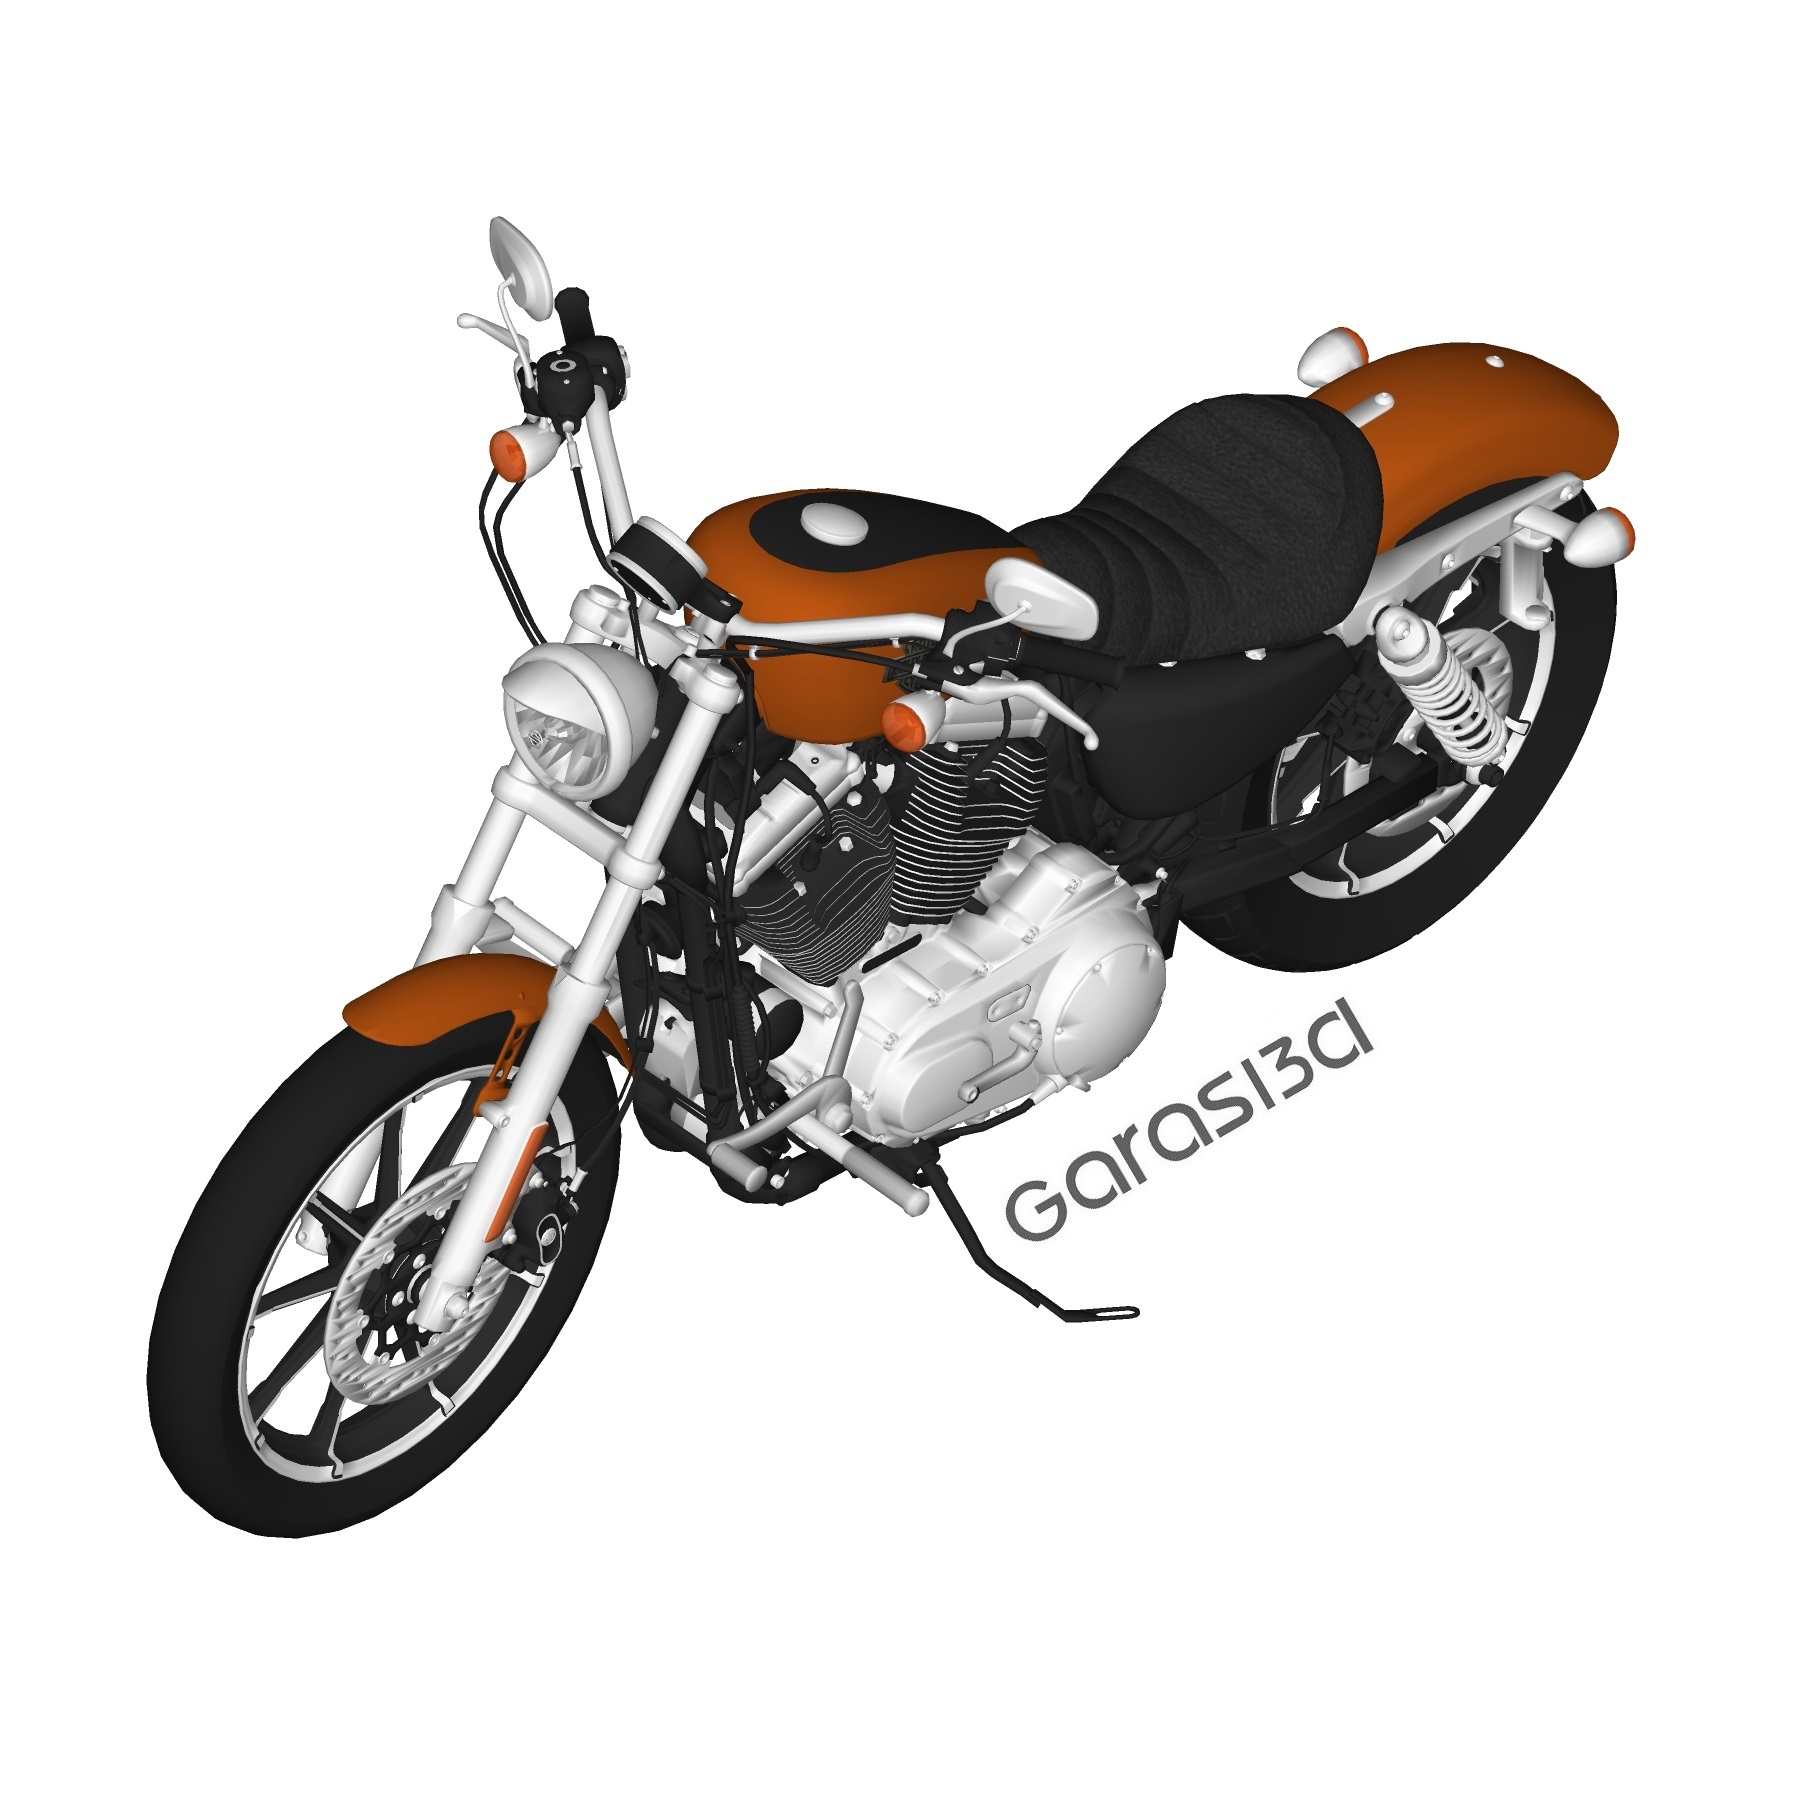 Harley-Davidson Sportster classic